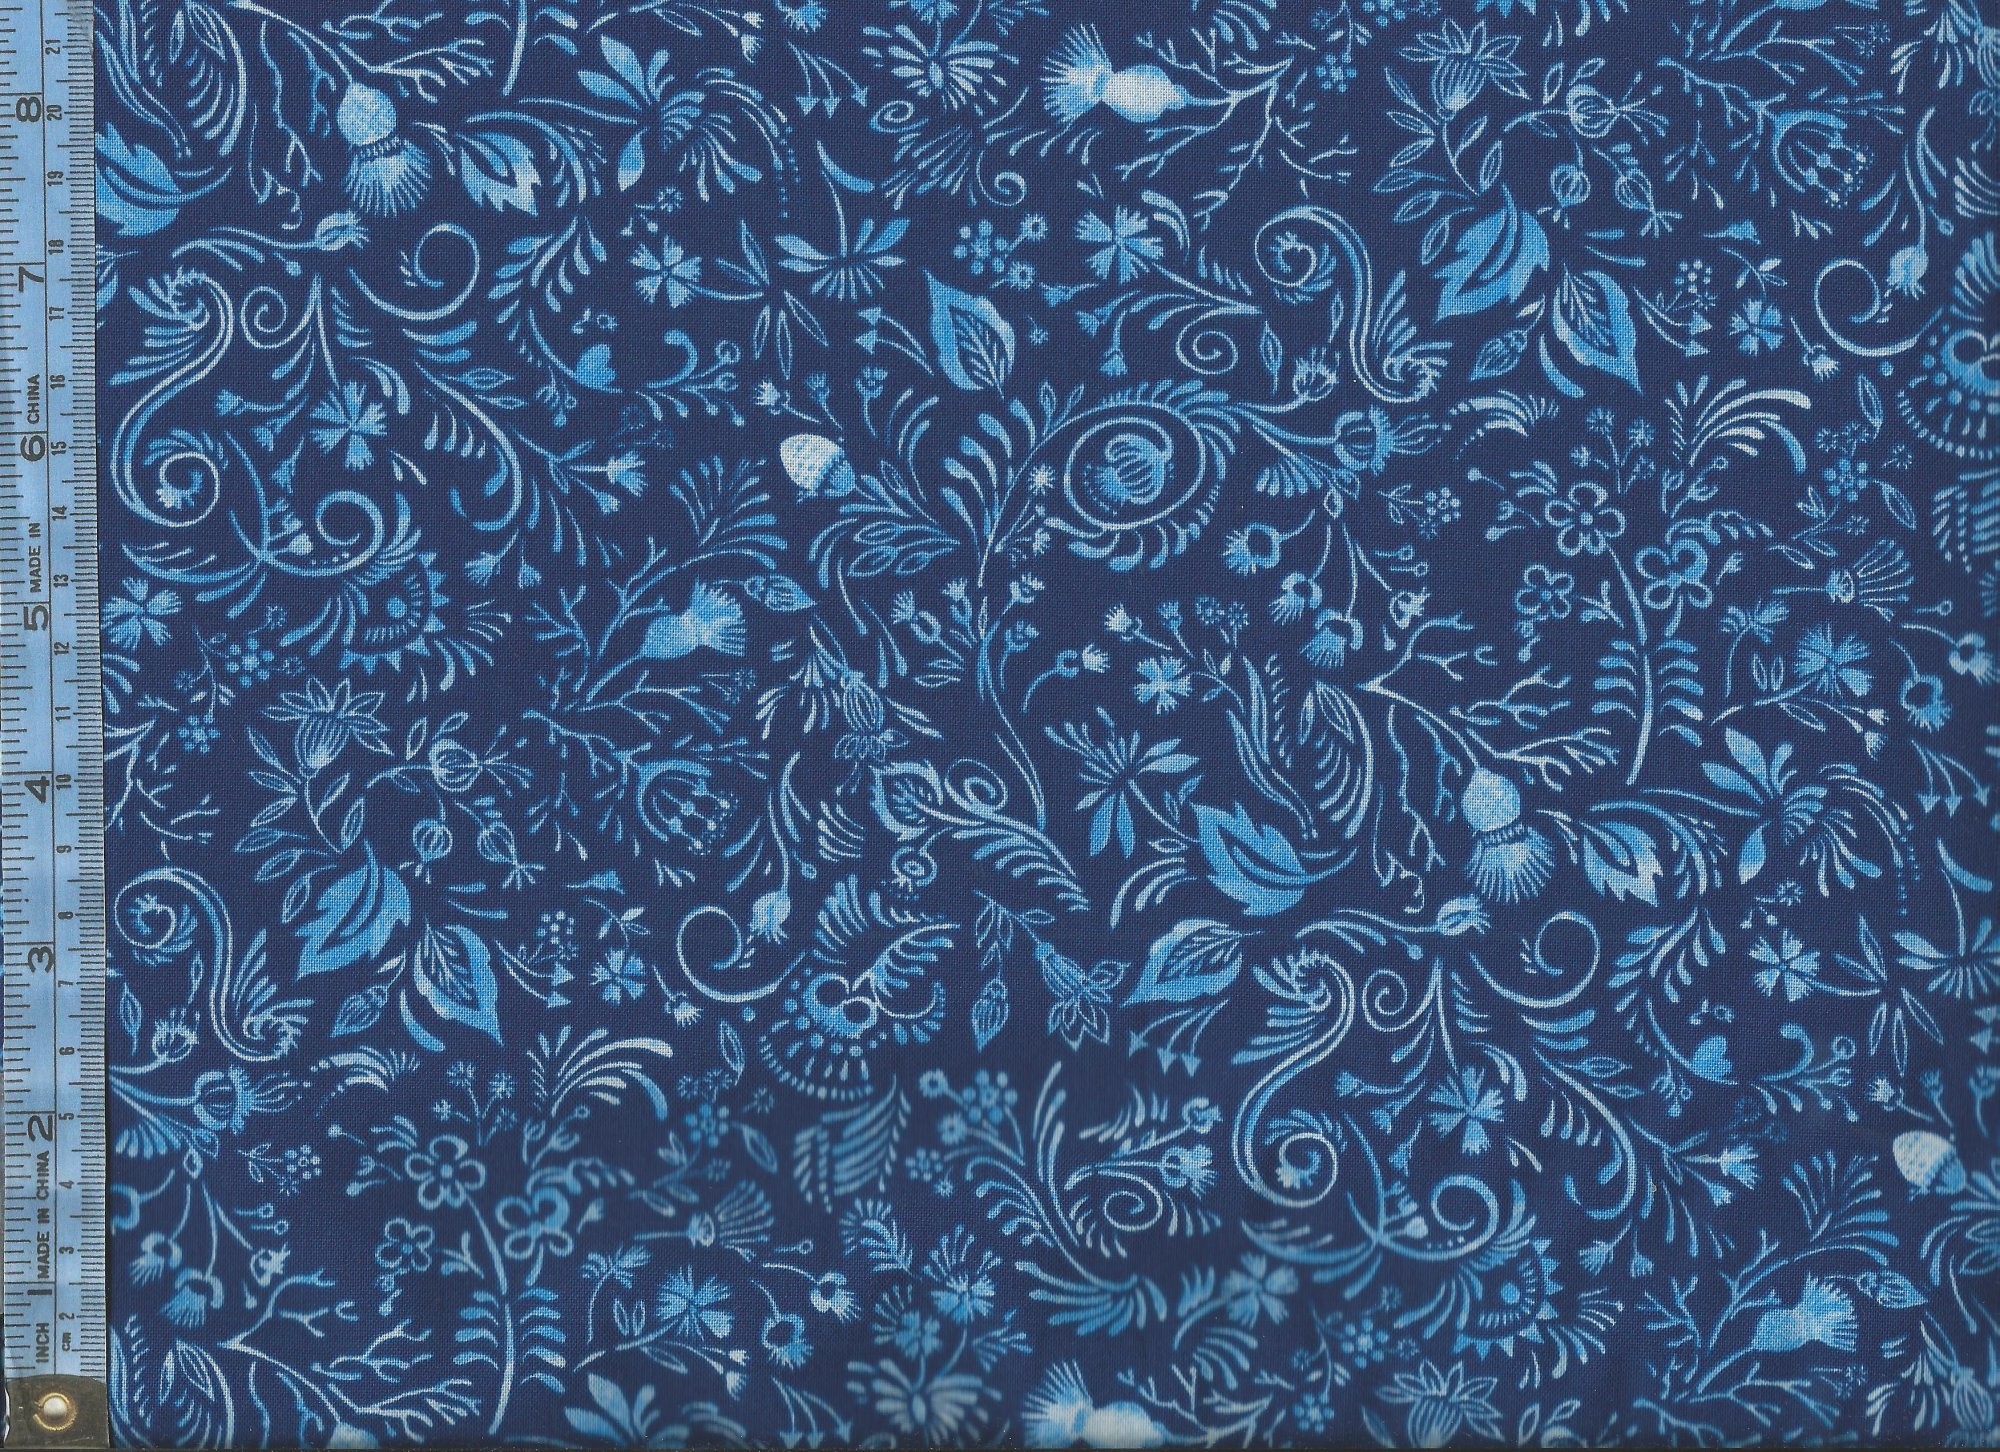 Flow Blue Garden – light blue floral and leaves on navy blue background